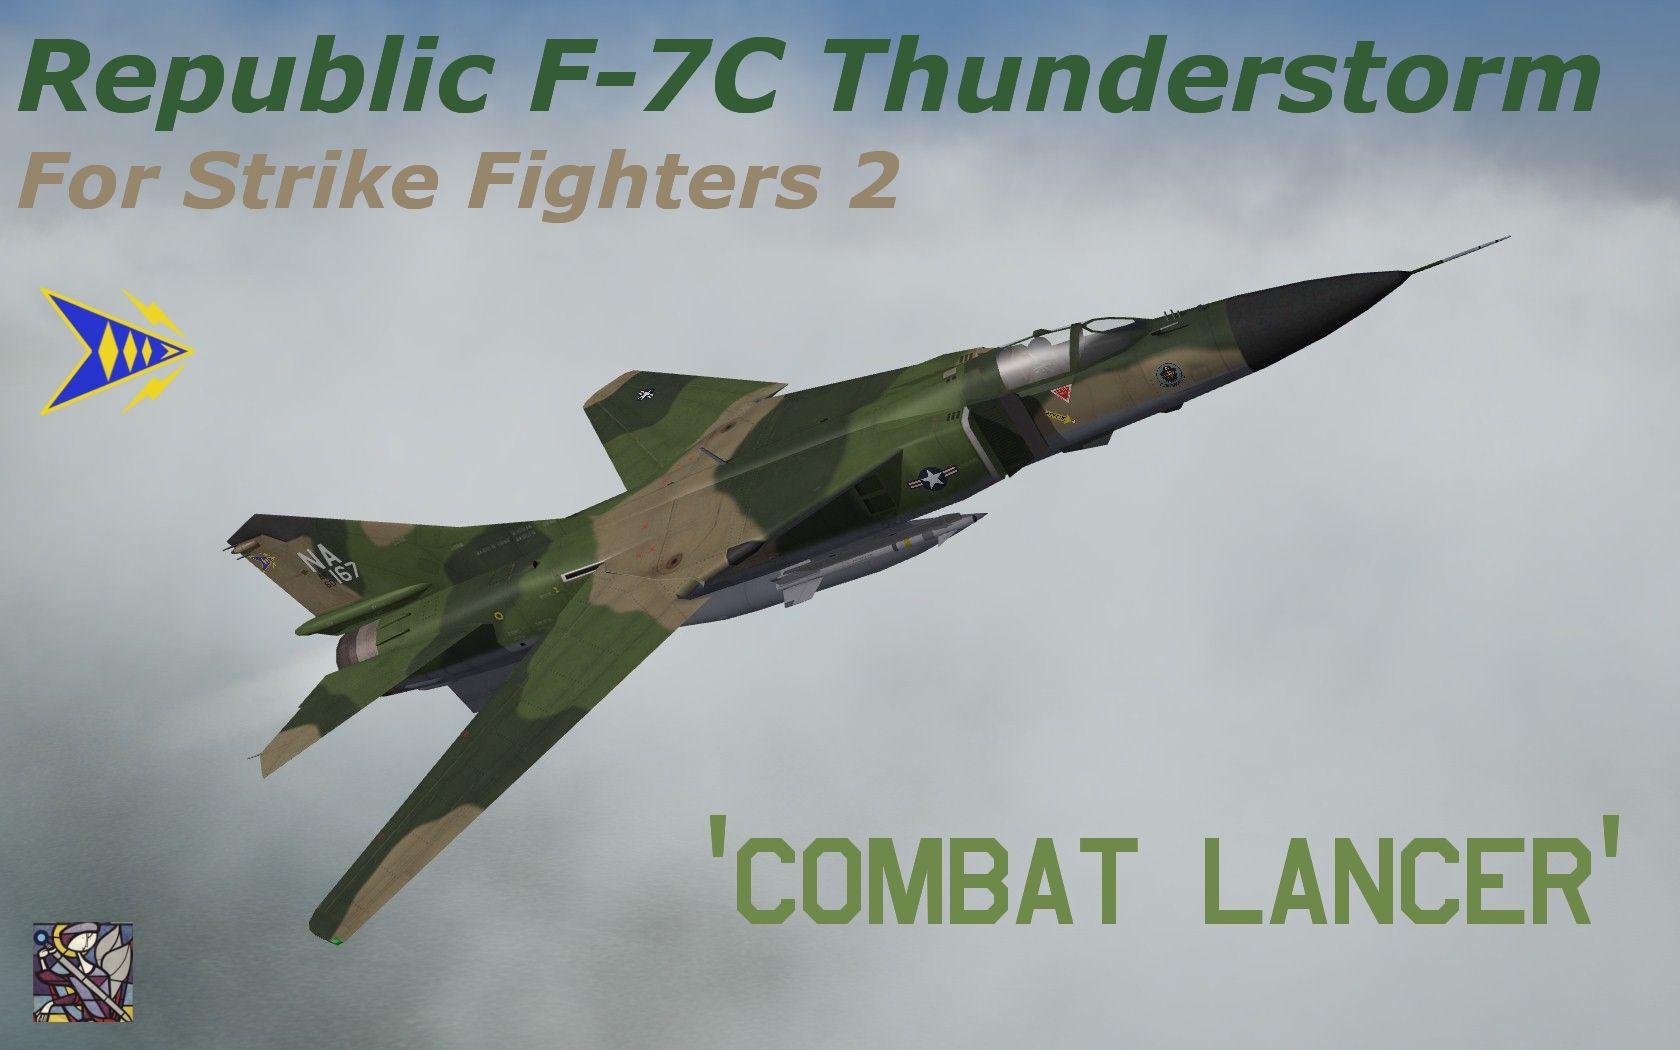 USAFF-7C14.jpg